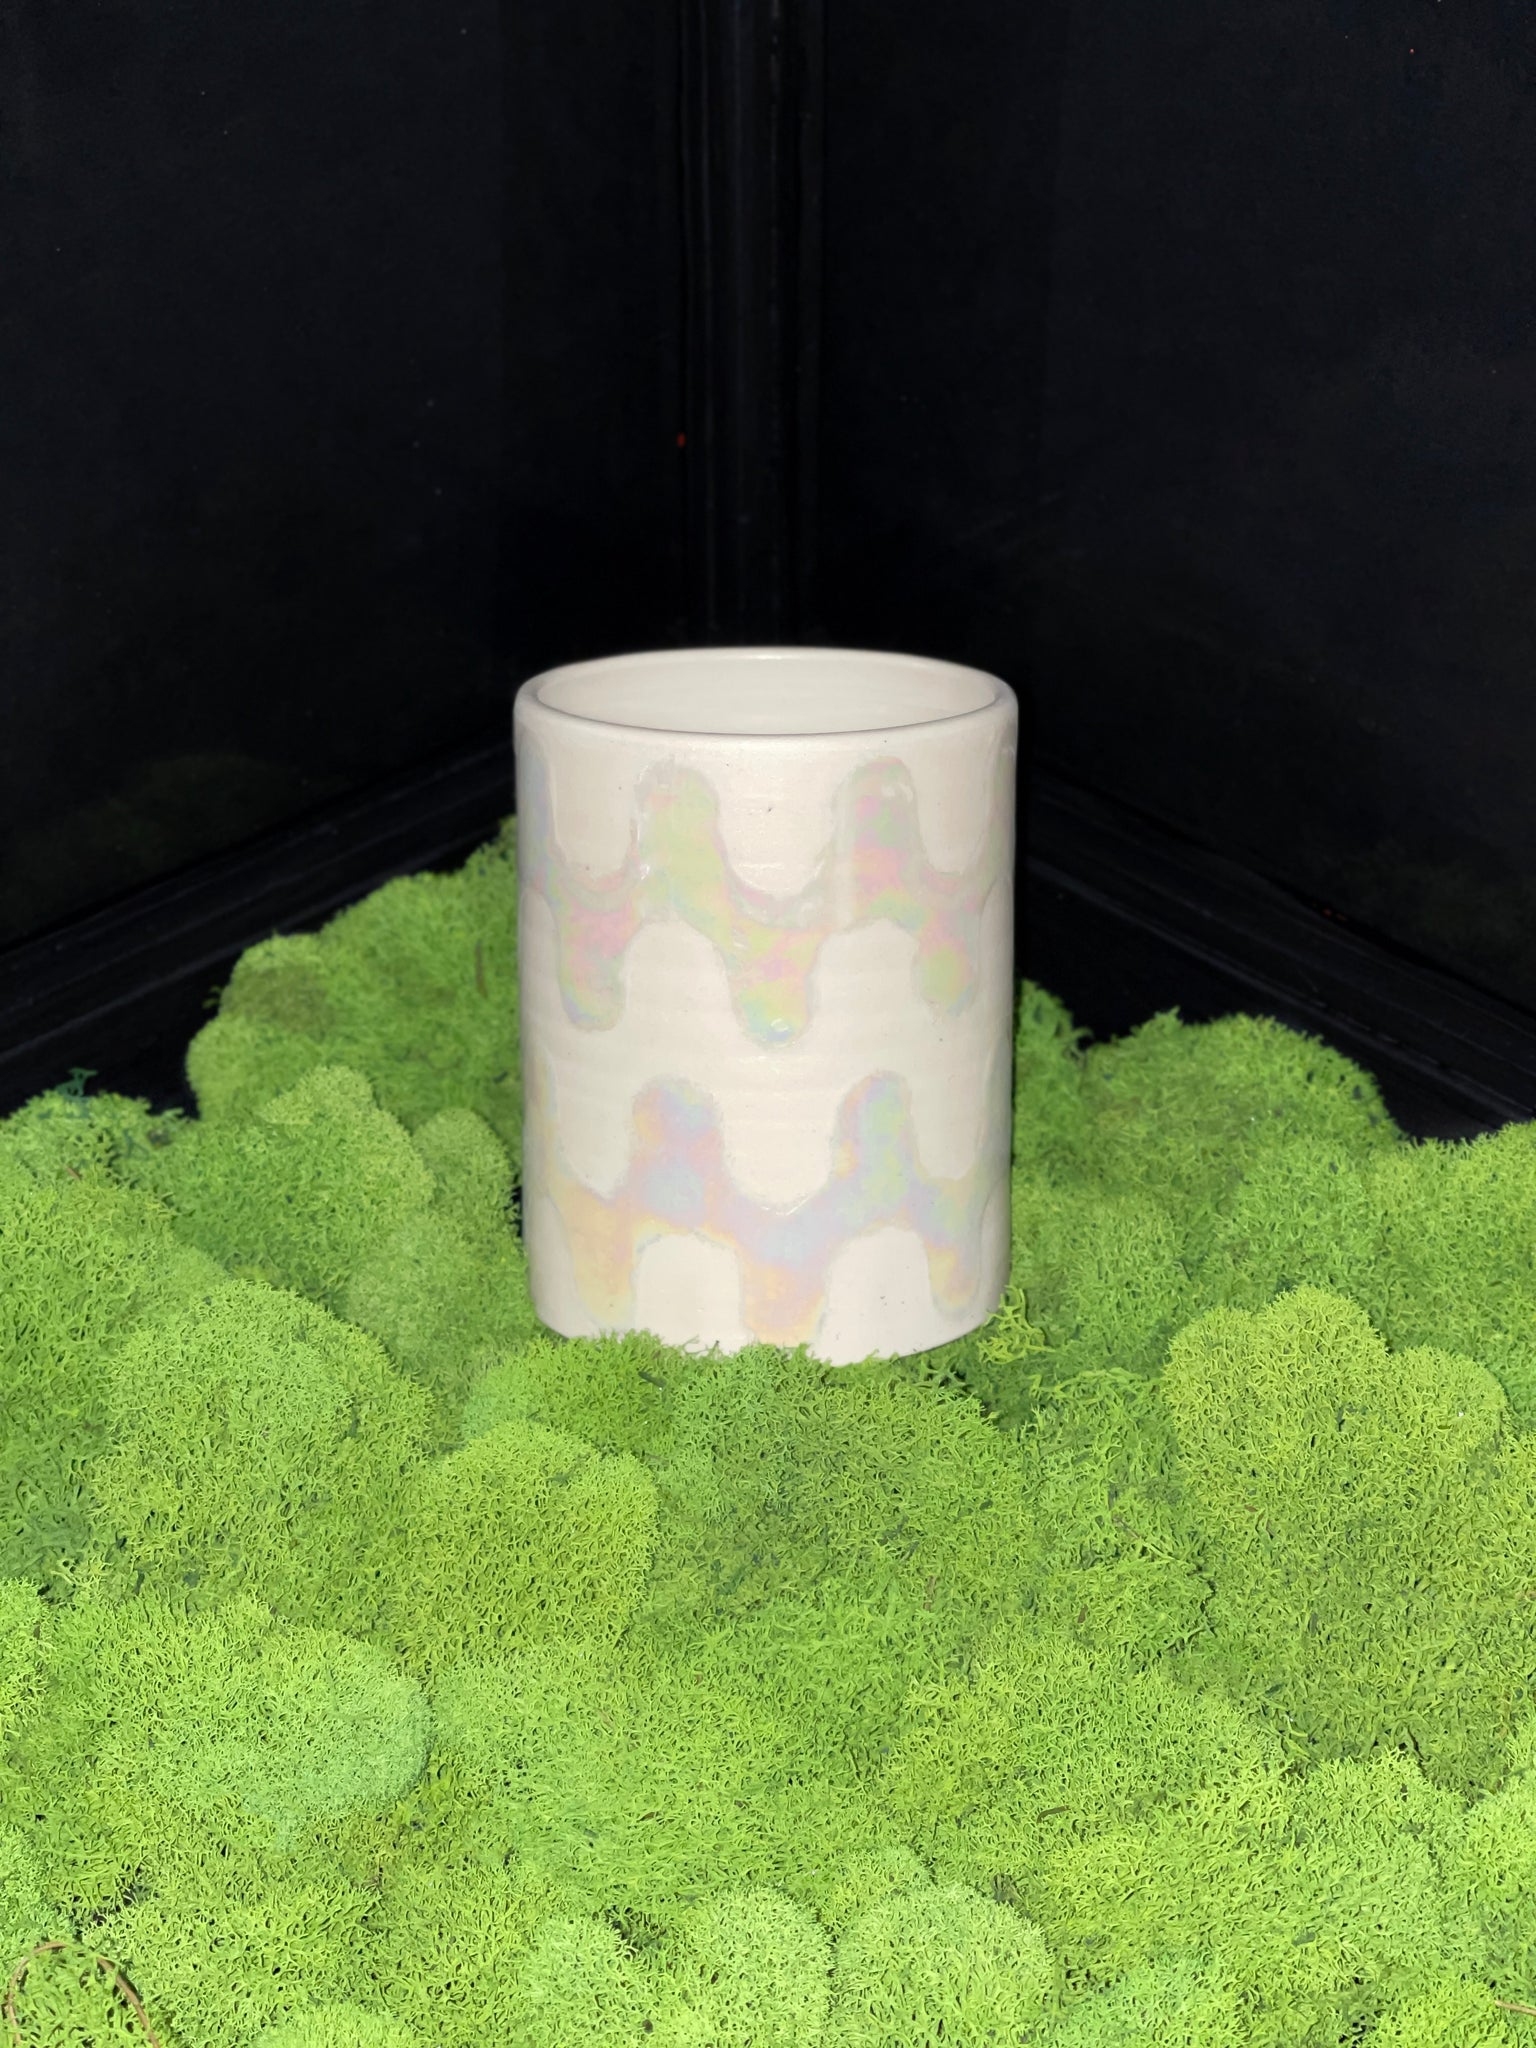 Iridescent Borsani Cup by NonPorous Ceramics